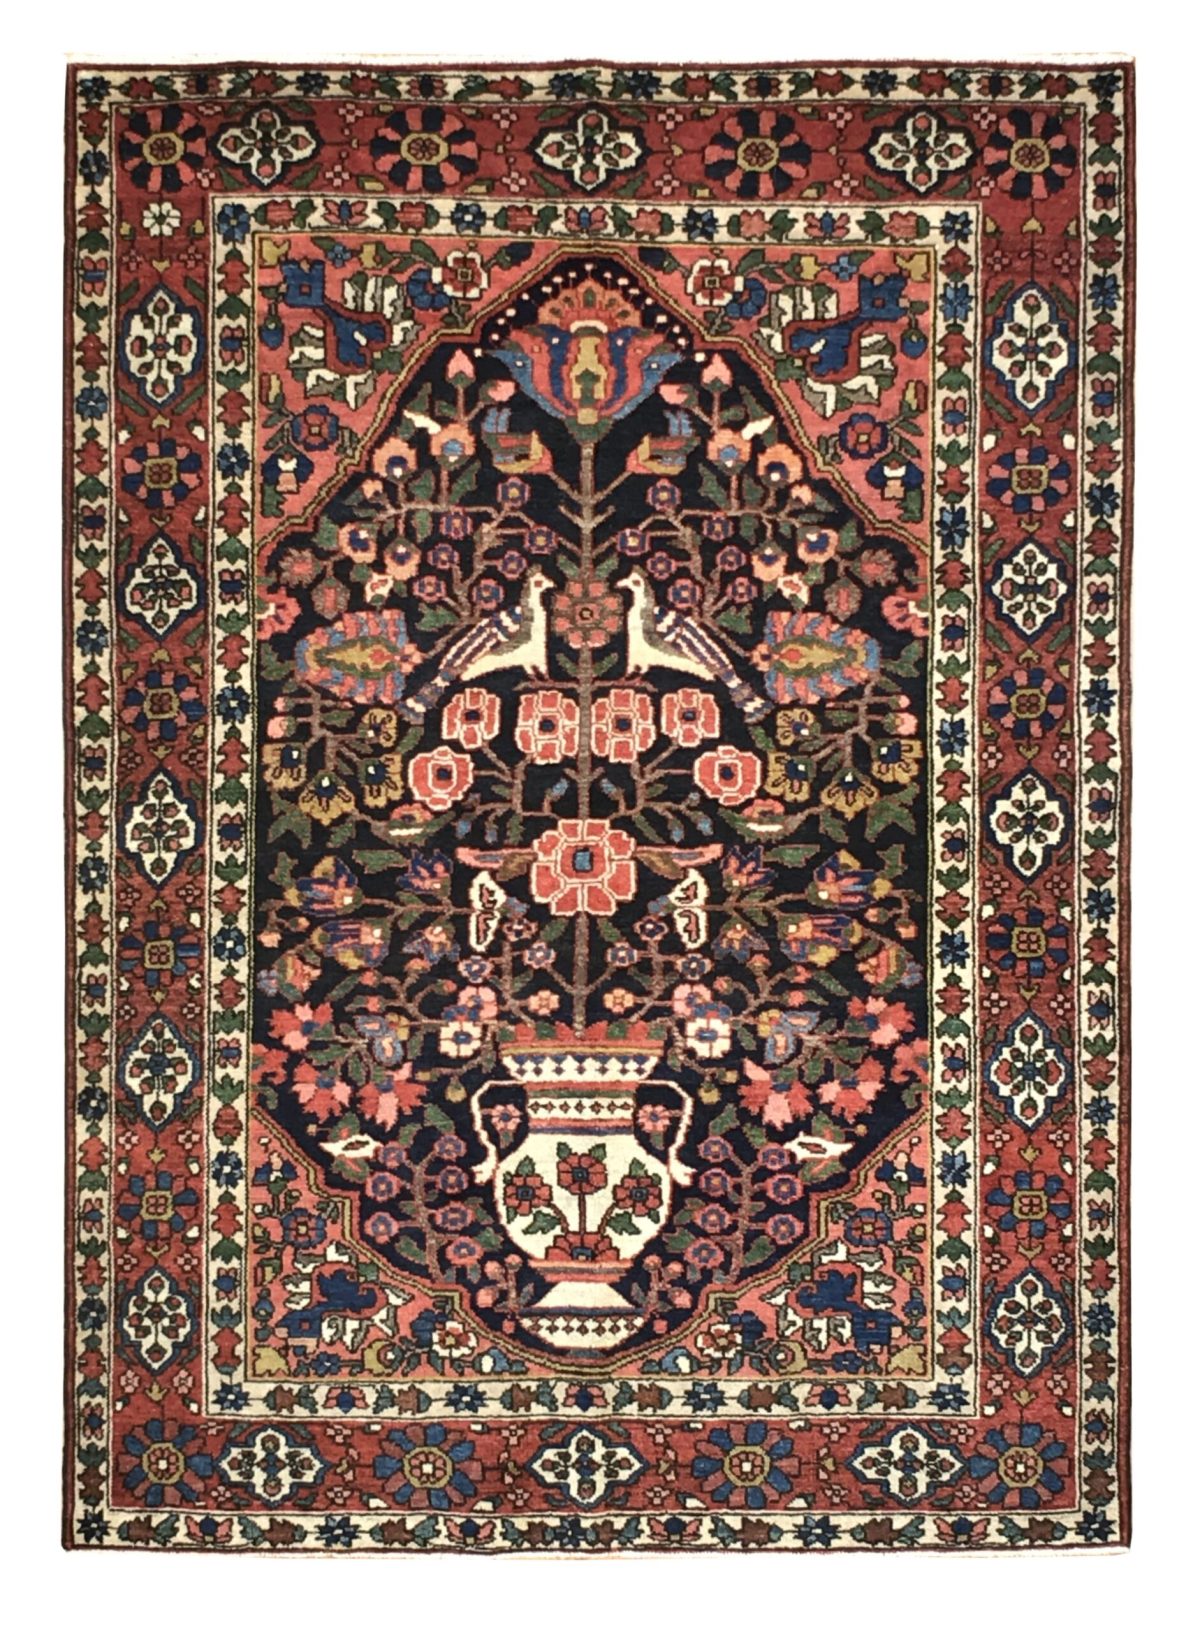 Antique Persian Bakhtiari 4' 10" x 6' 10" Handmade Wool Area Rug - Shabahang Royal Carpet